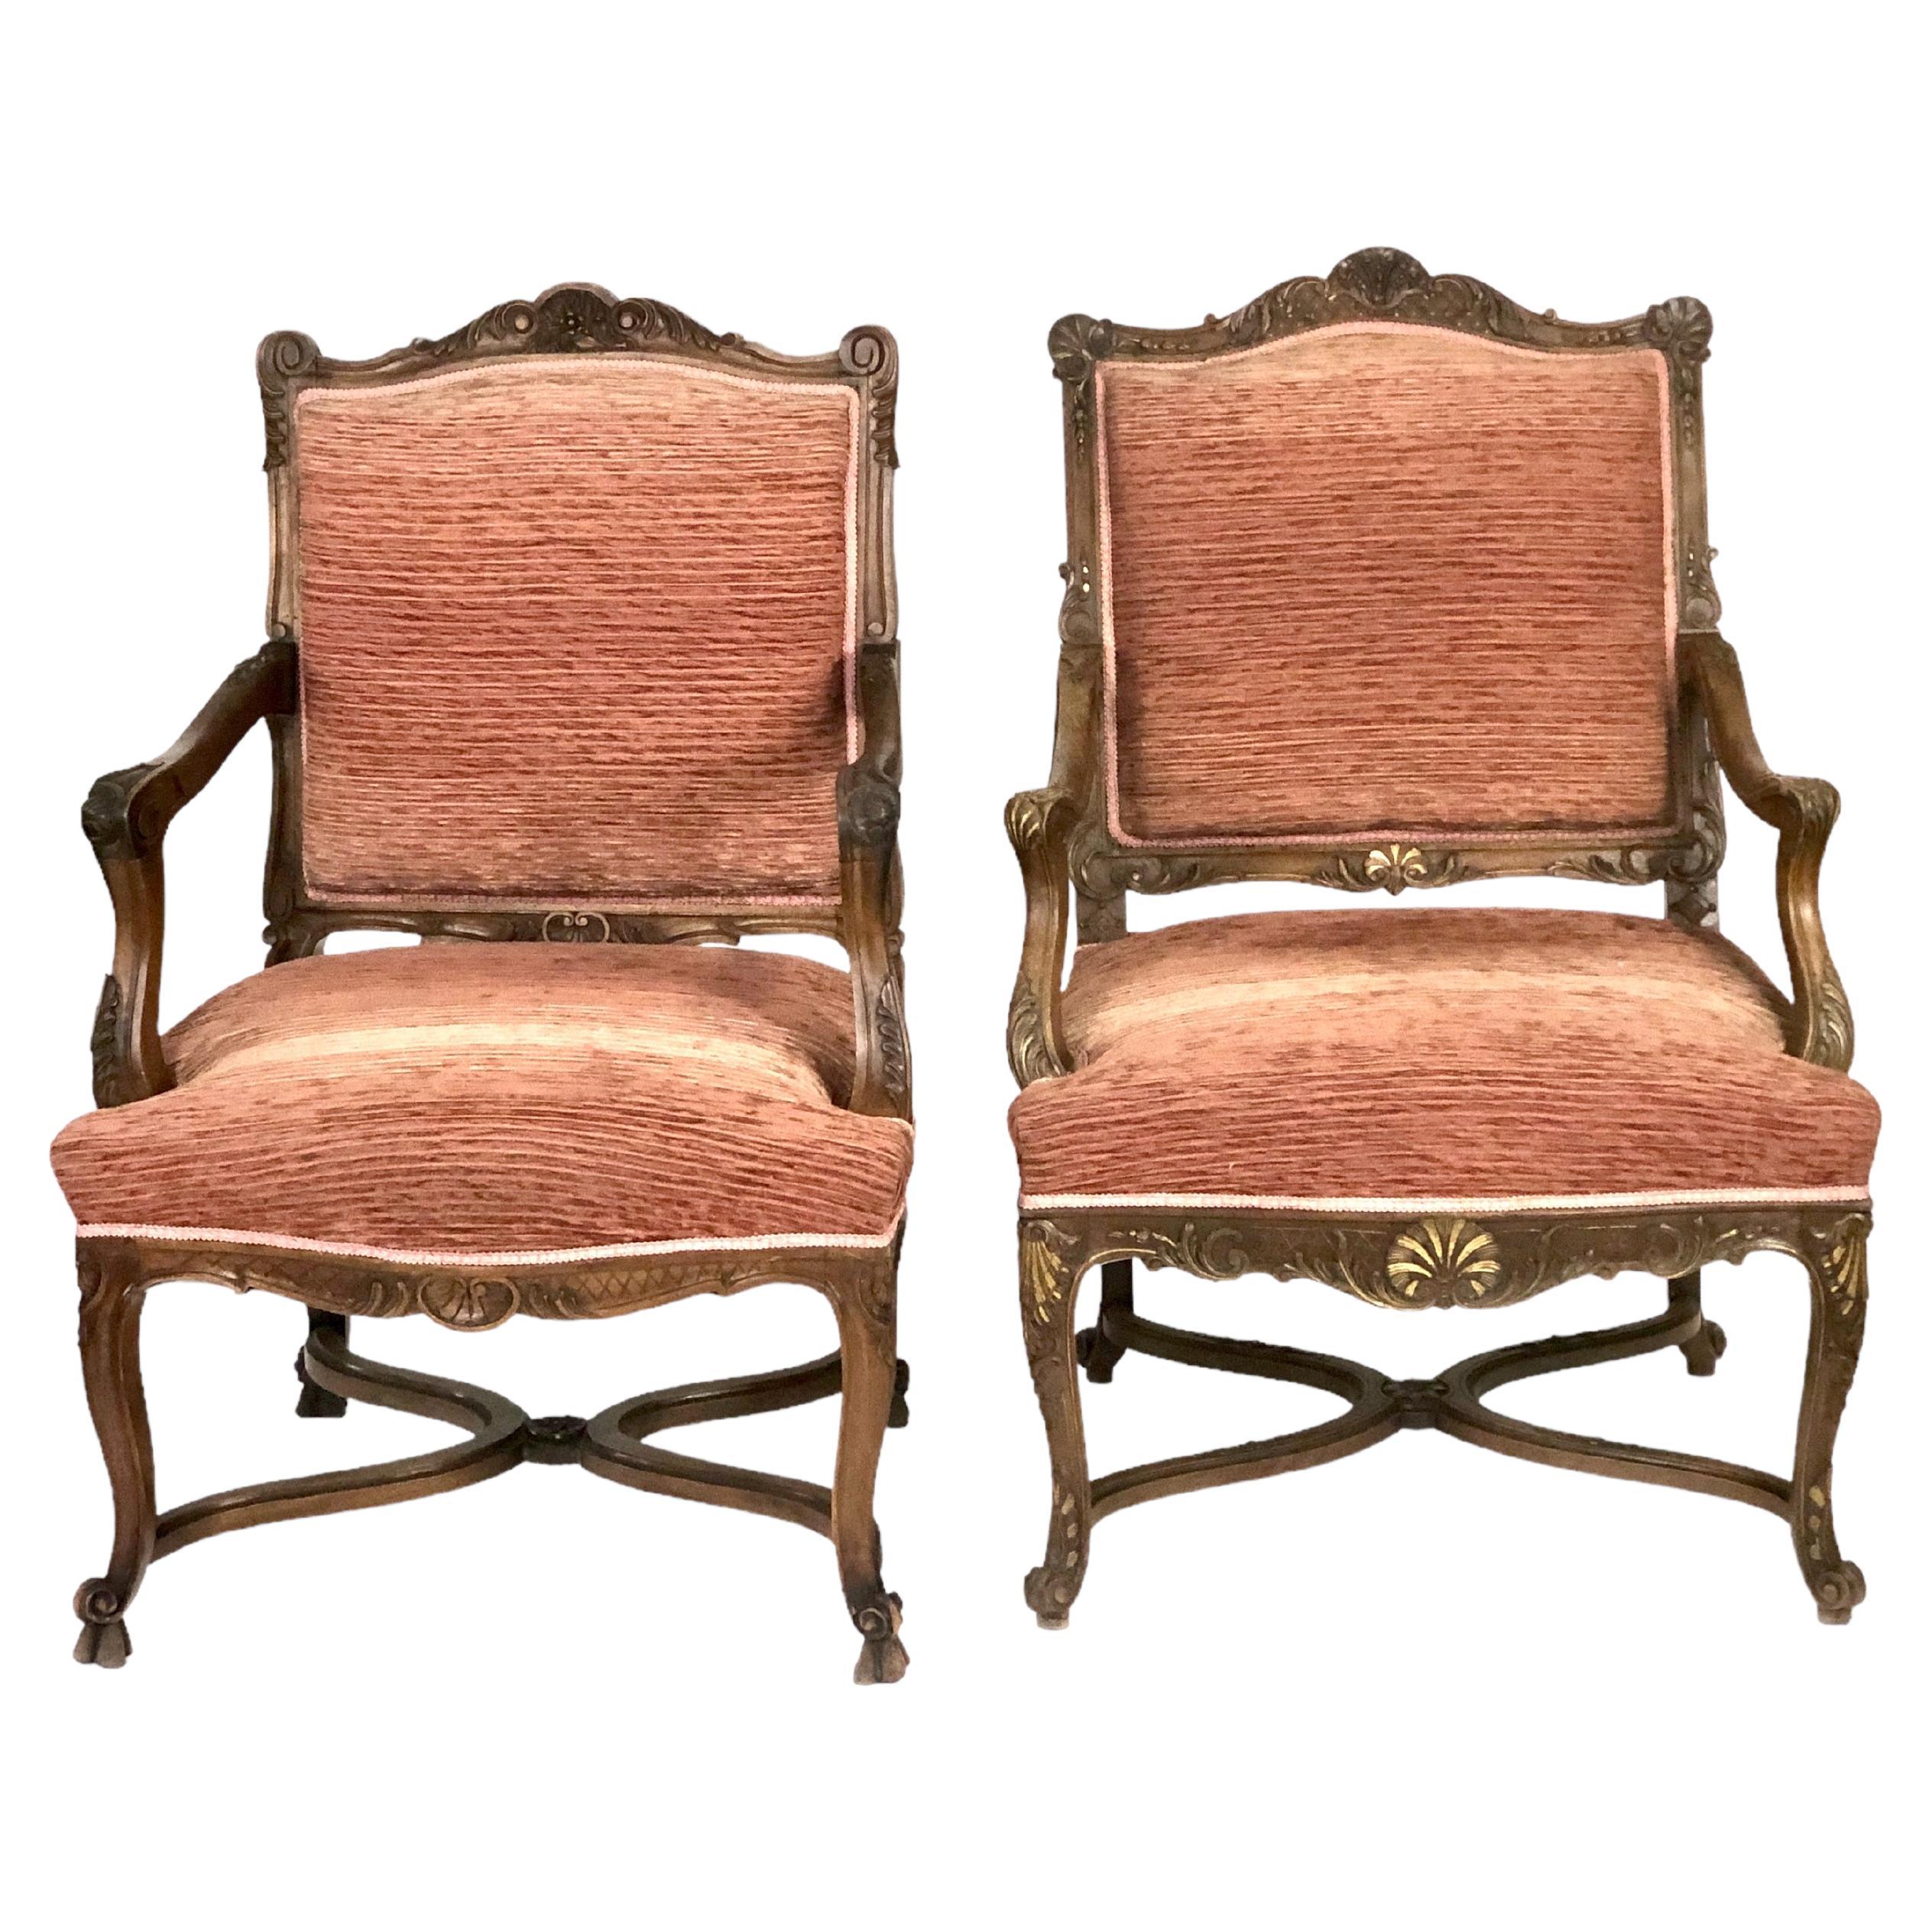 19th Century Pair of Walnut Regency Chairs Called “Fauteuils à La Reine”